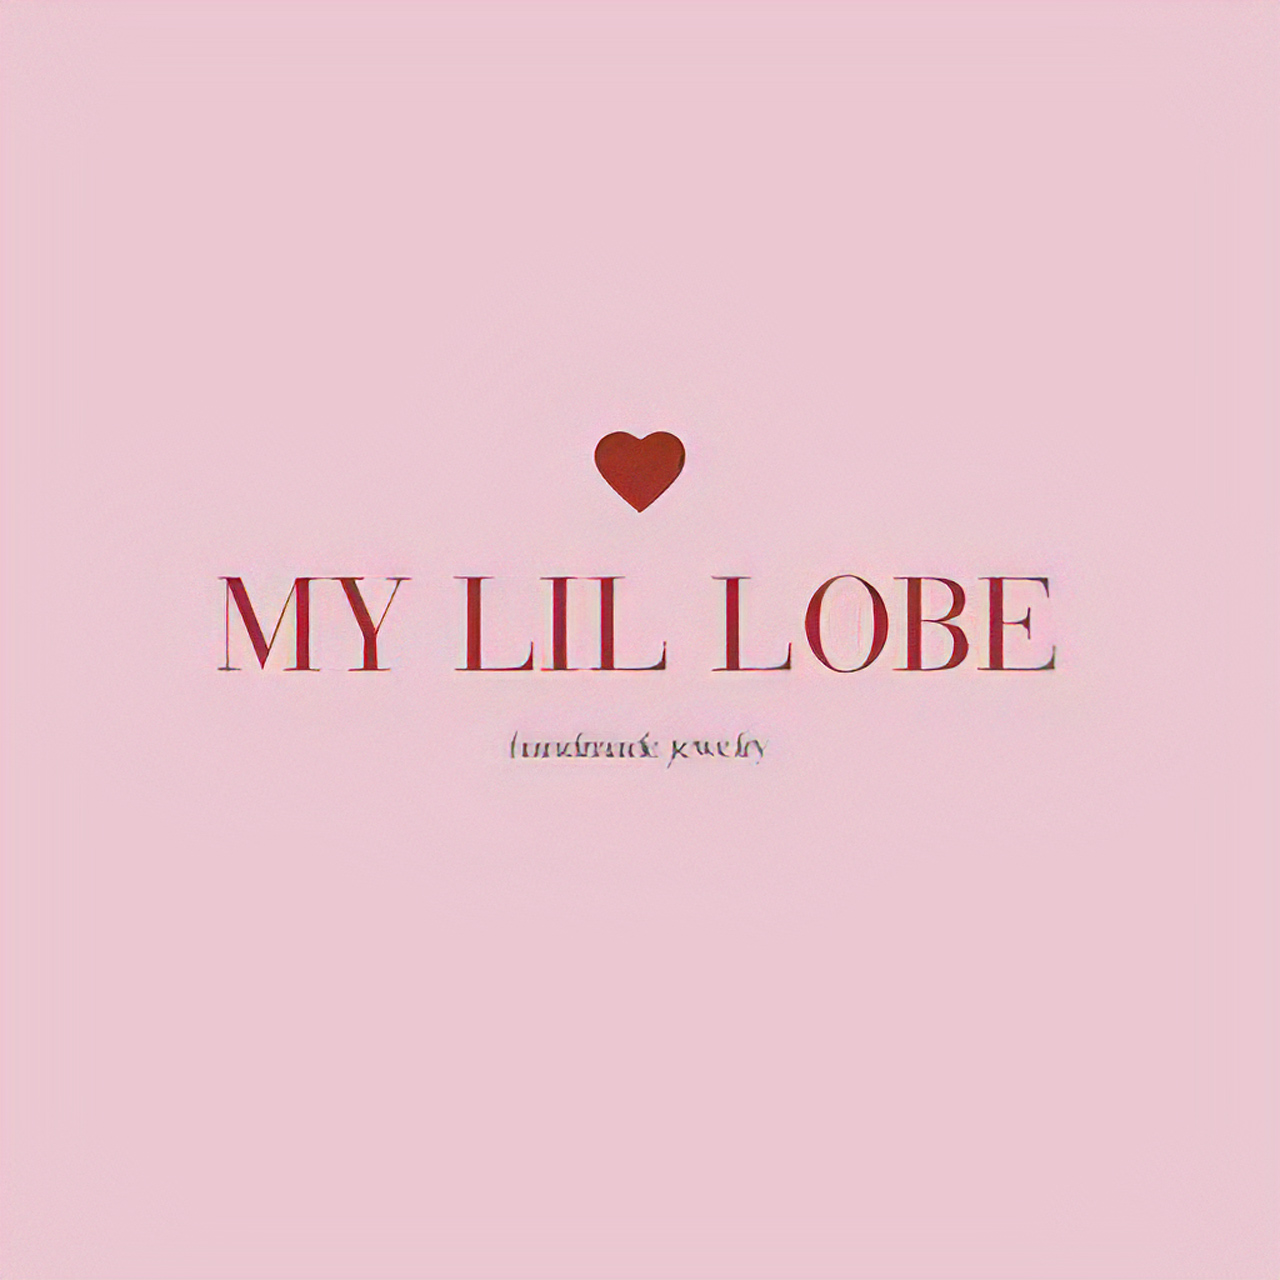 My lil lobe - マイリルローブ